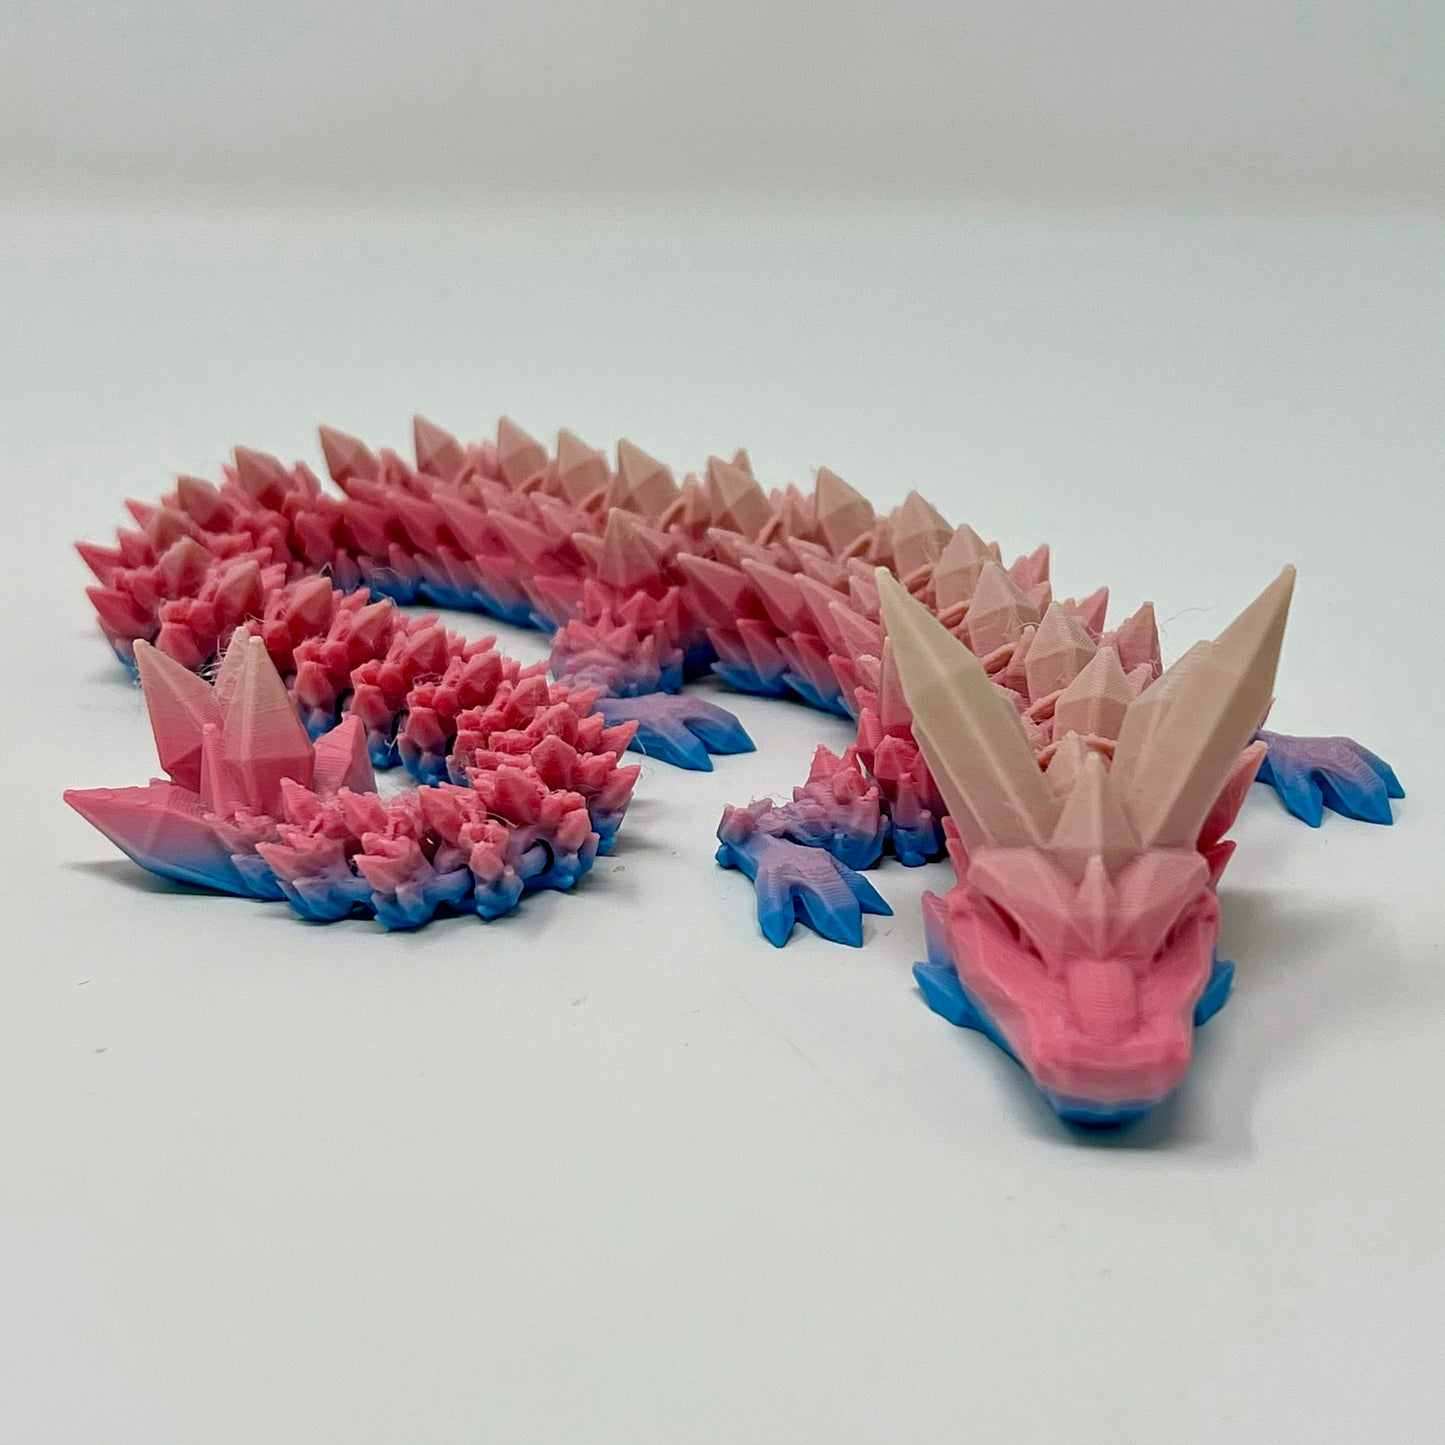 3D Printed Crystal Dragon (more colors)